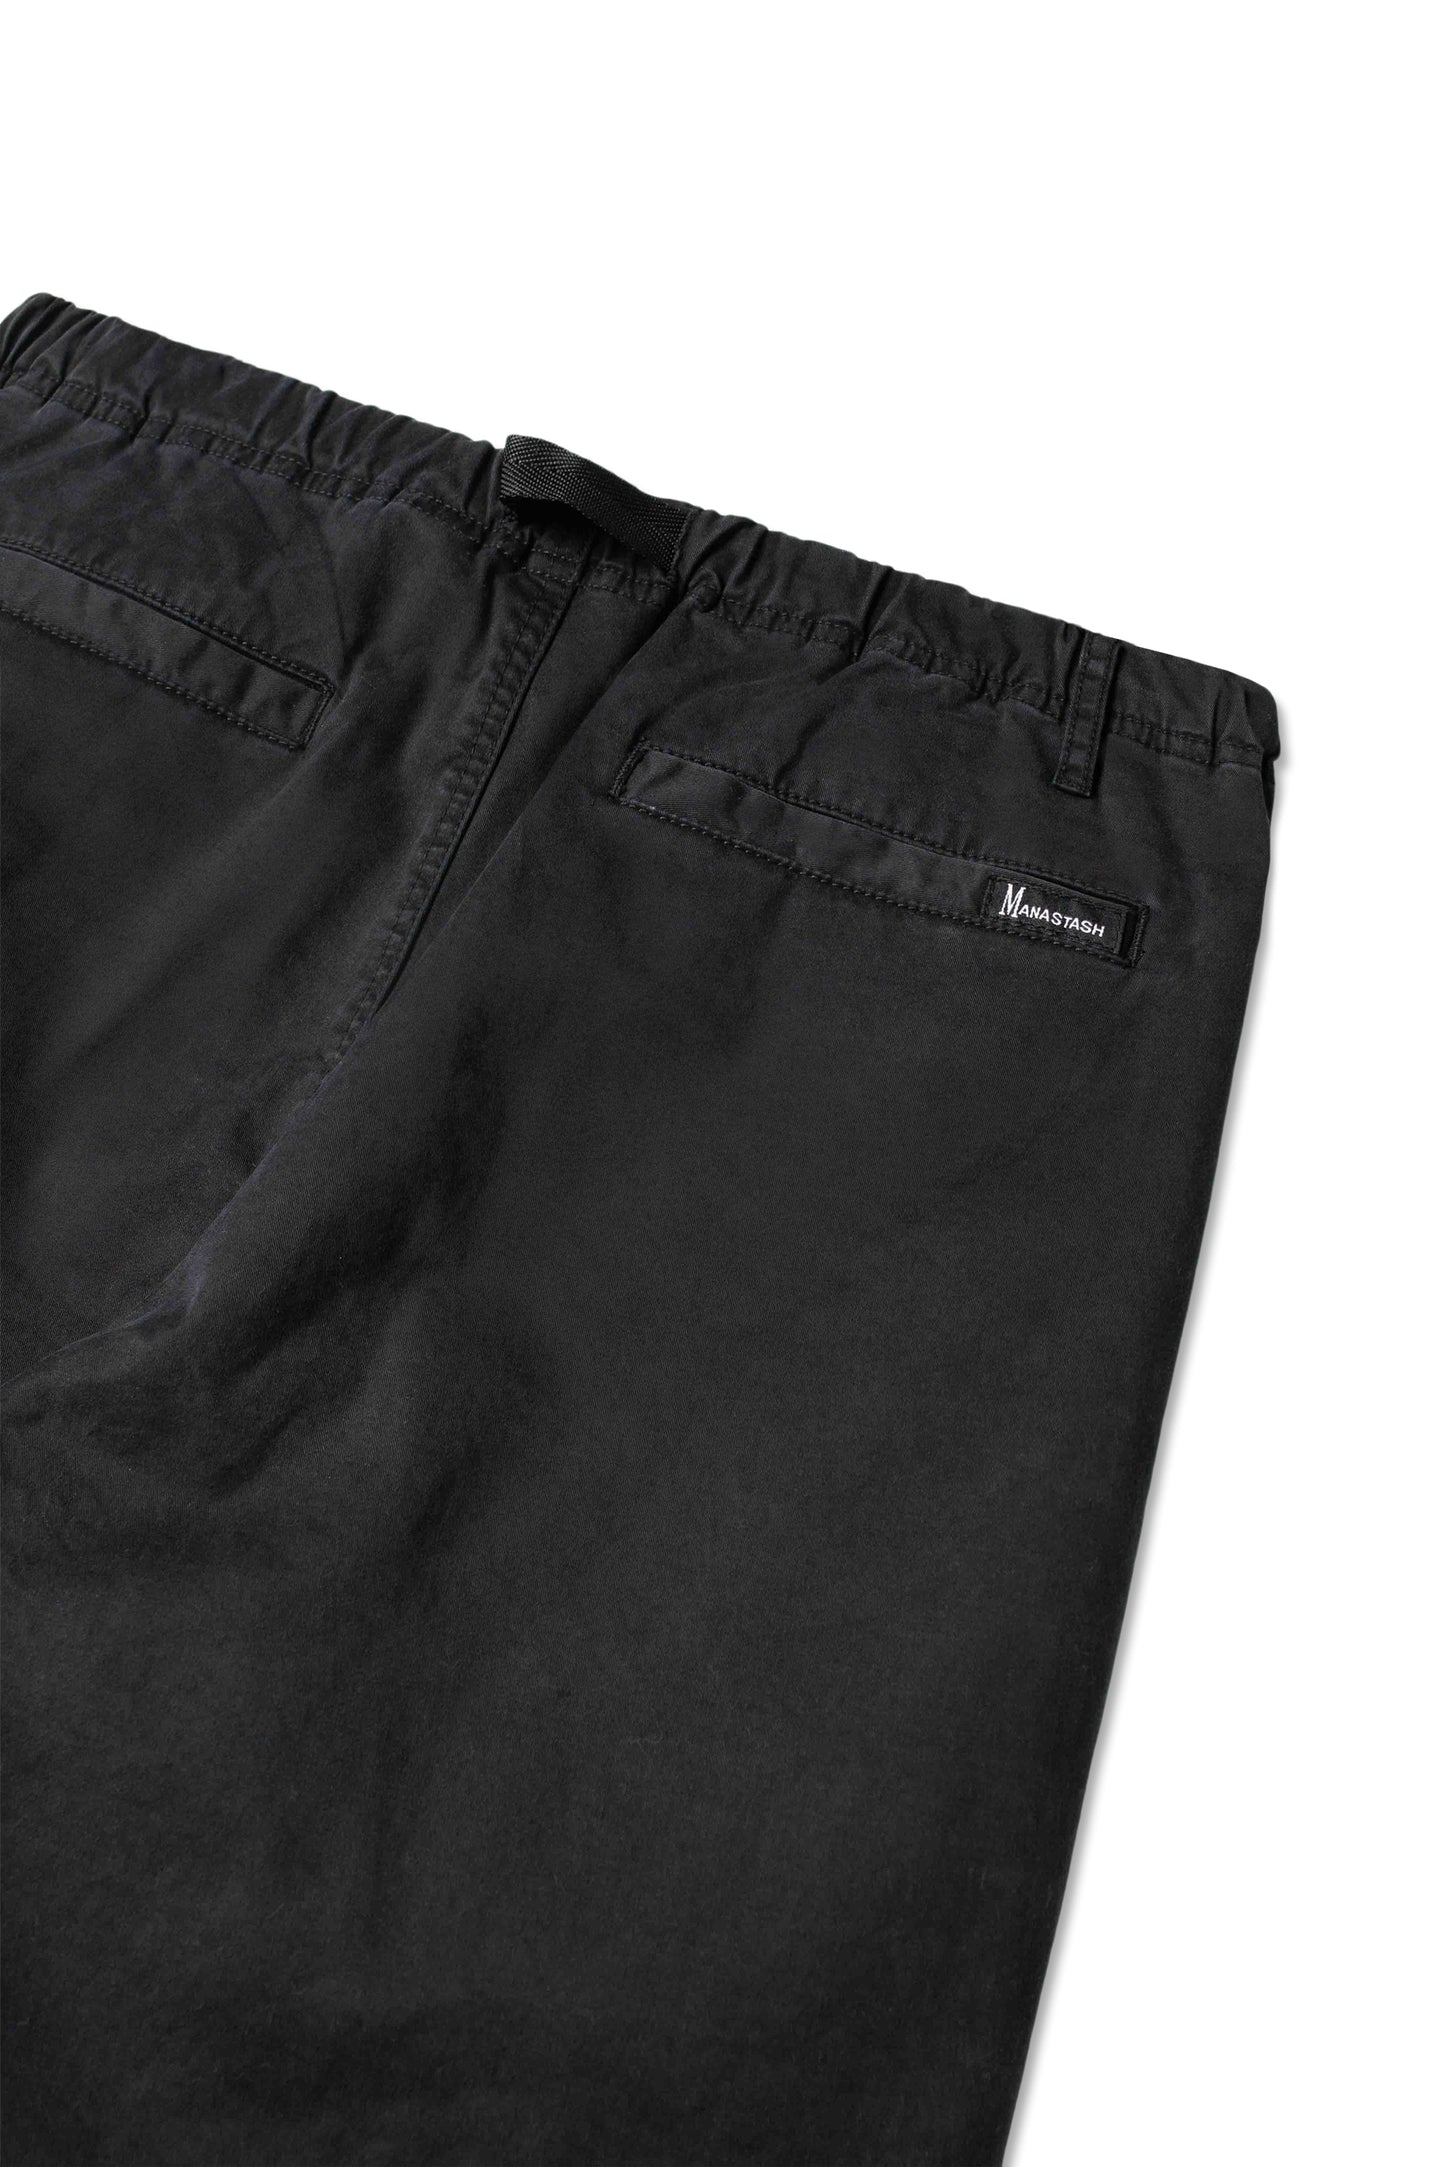 Flex Climber Shorts (Black)